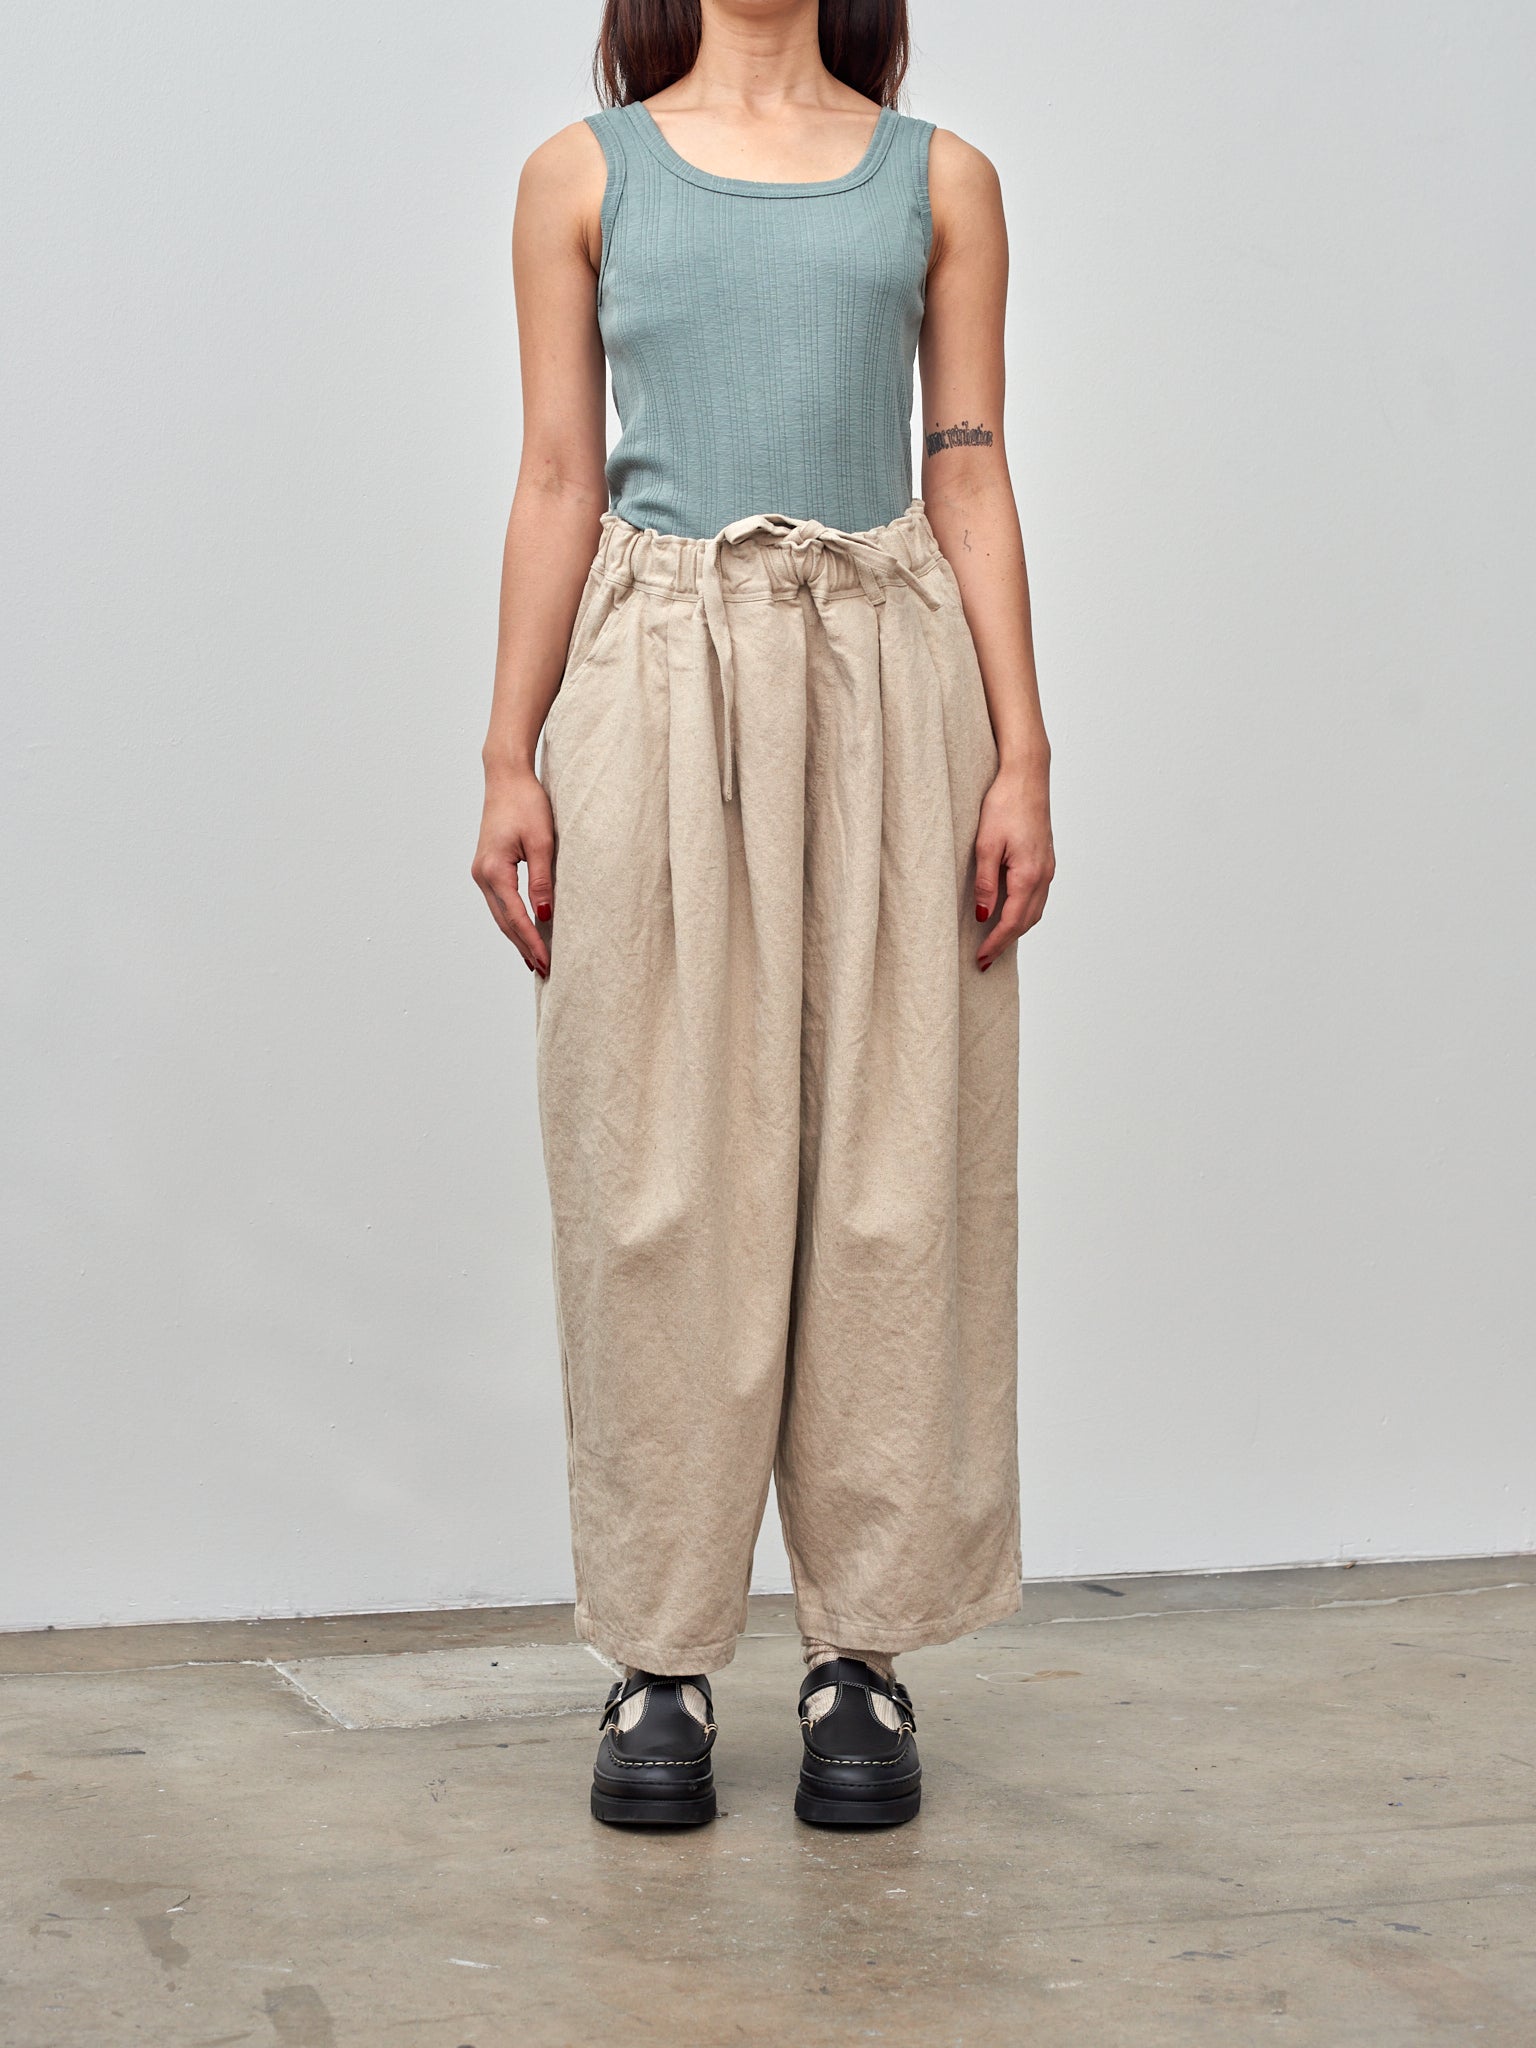 Namu Shop - Ichi Cotton Linen Pants - Natural